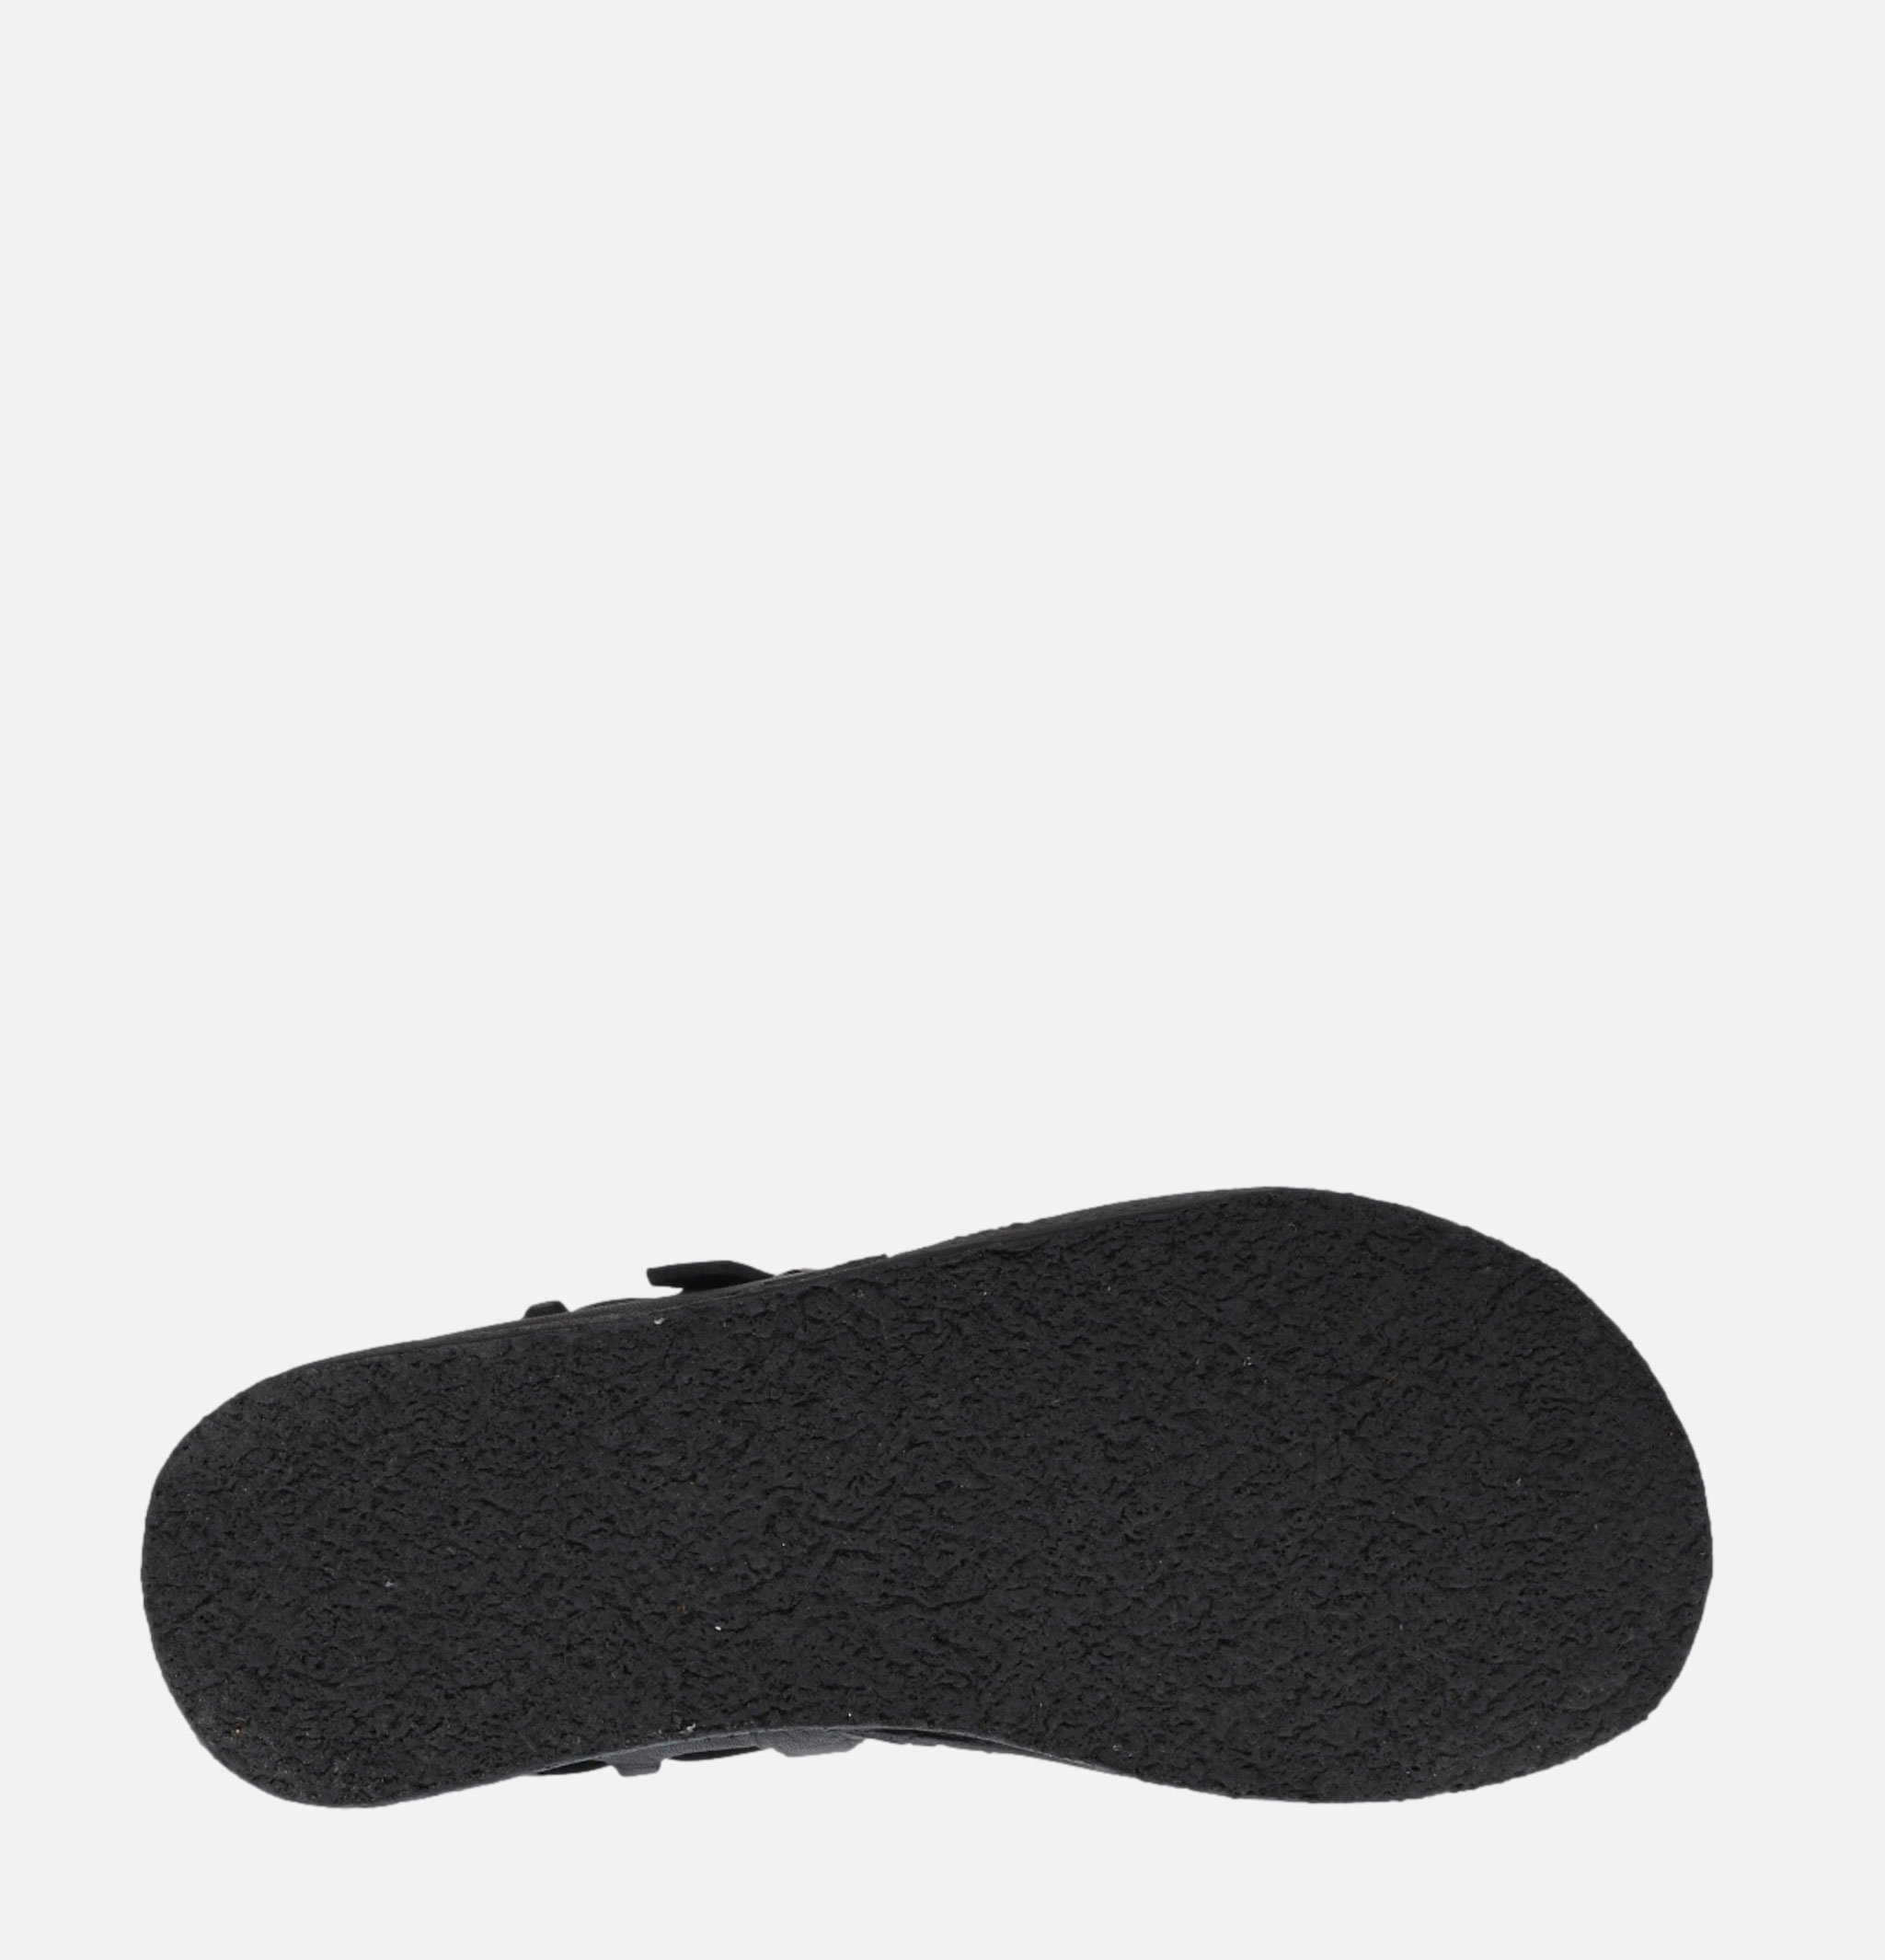 Yogi Corso Monk Shoes Black